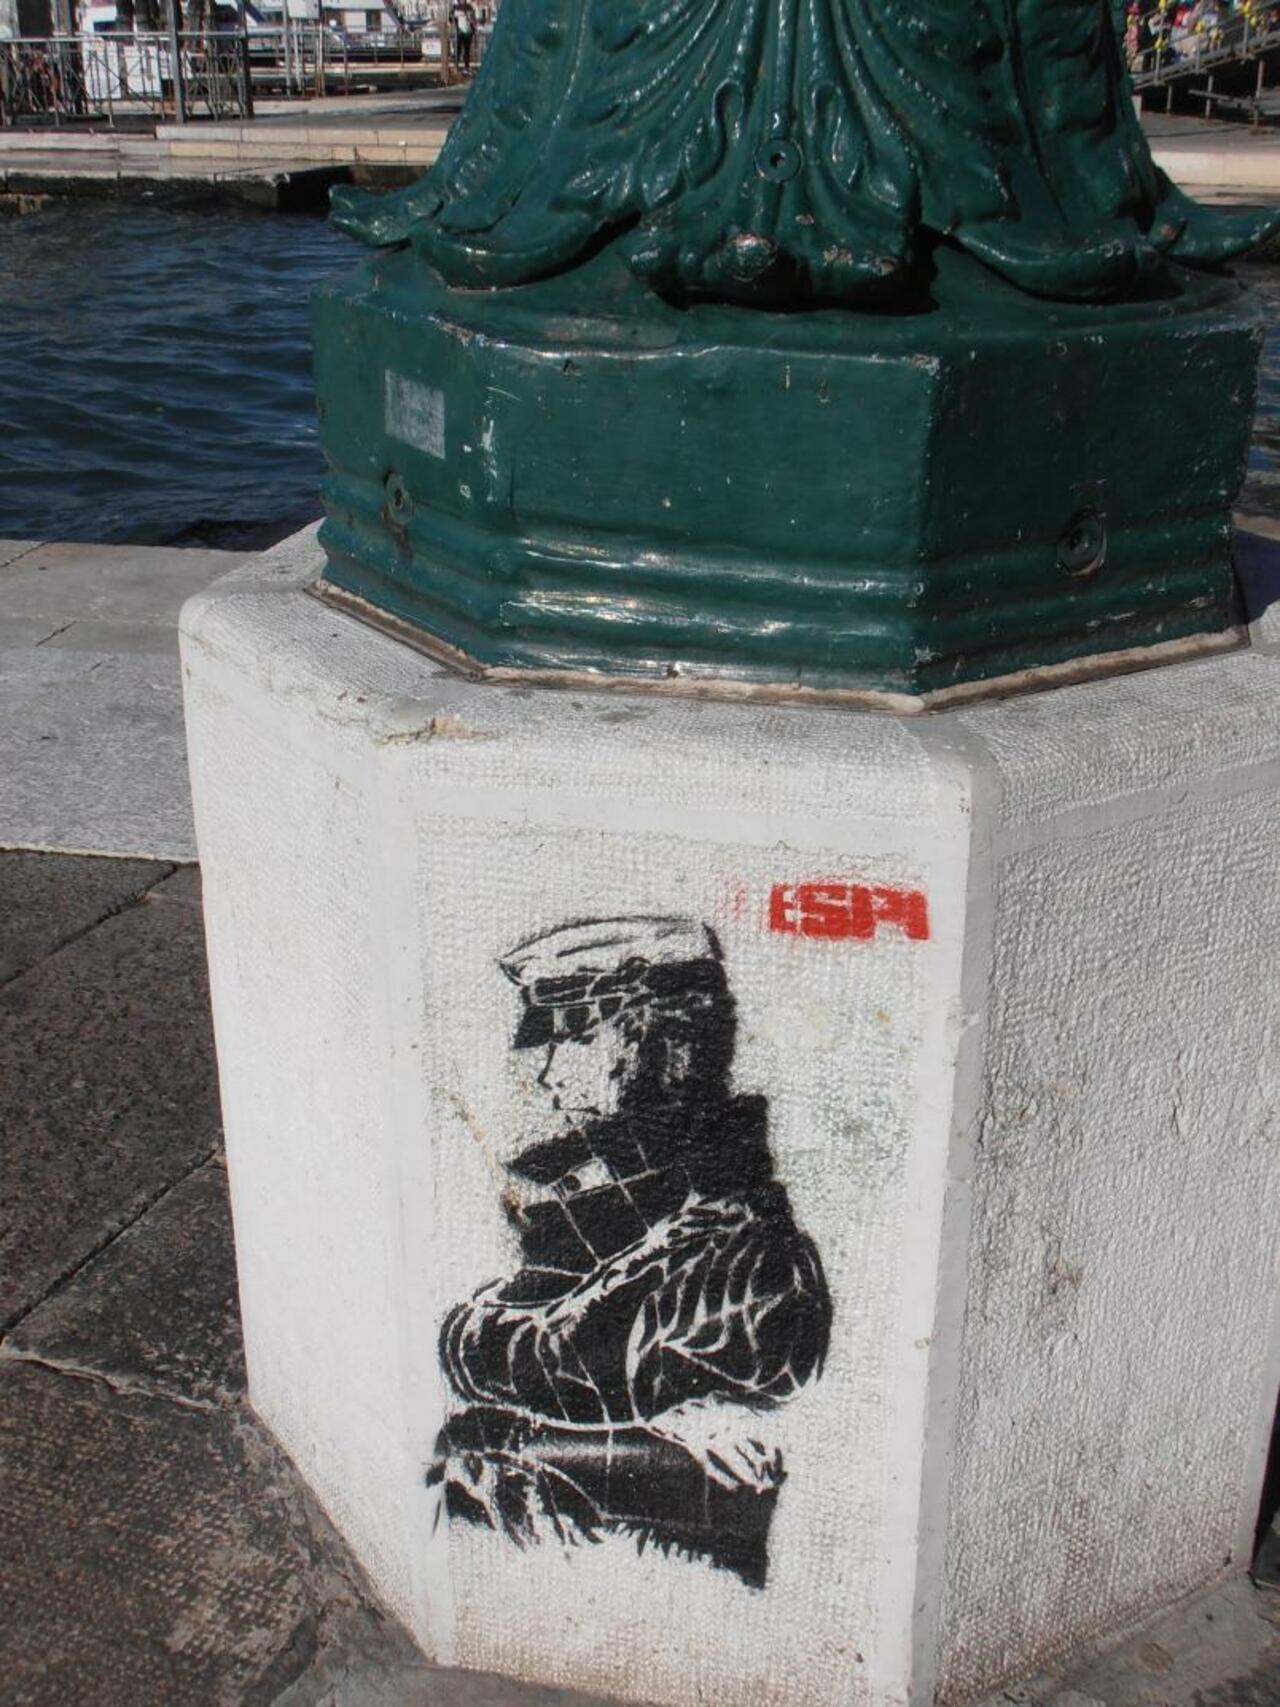 #graffiti #streetart #veniceitaly https://t.co/1ozU0eJNwD